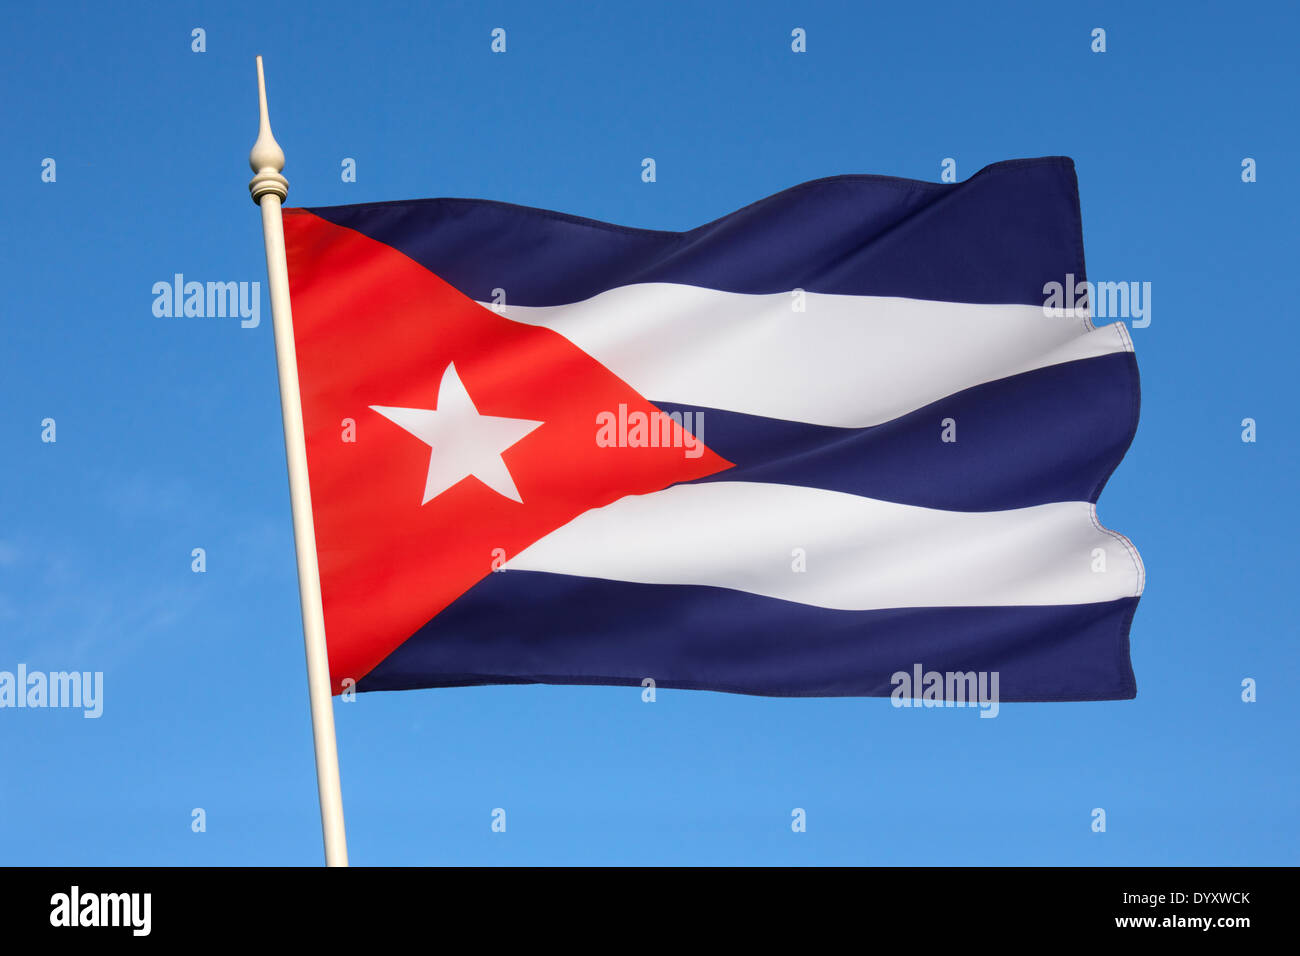 The national flag of the Caribbean island of Cuba. Stock Photo